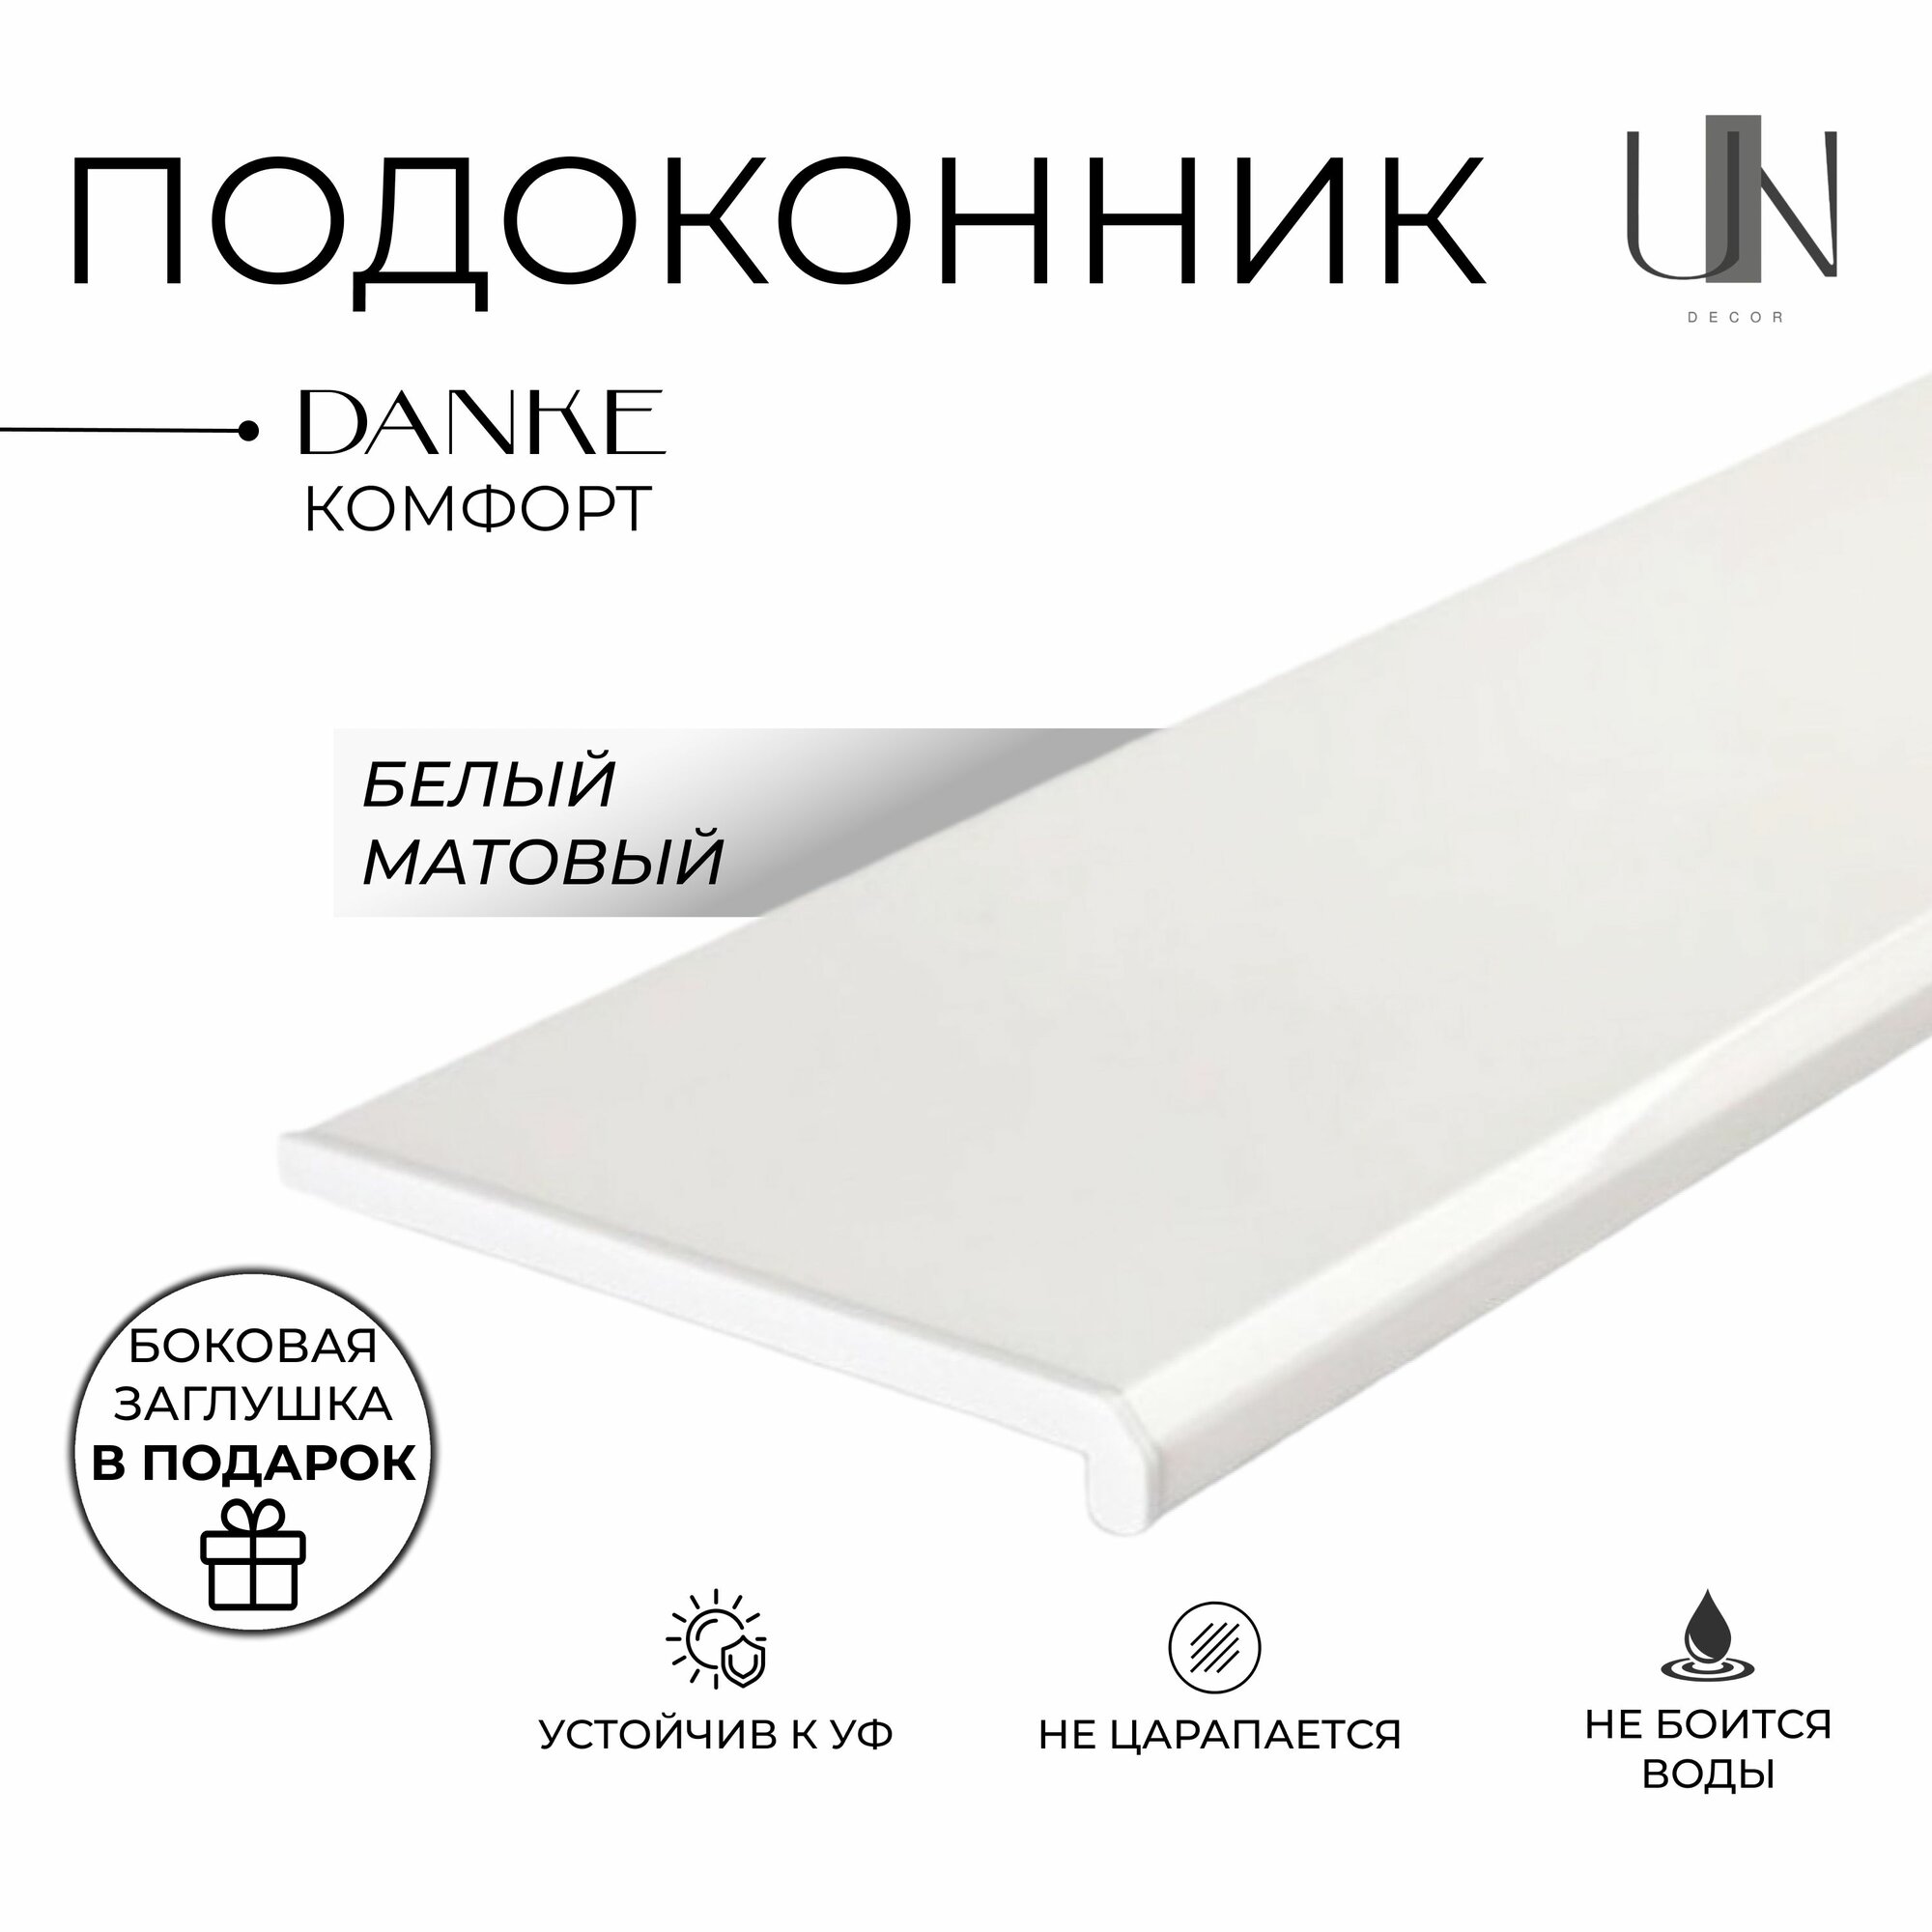 Подоконник Данке Белый матовый, коллекция DANKE KOMFORT 15 см х 1,2 м. пог.(150мм*1200мм)